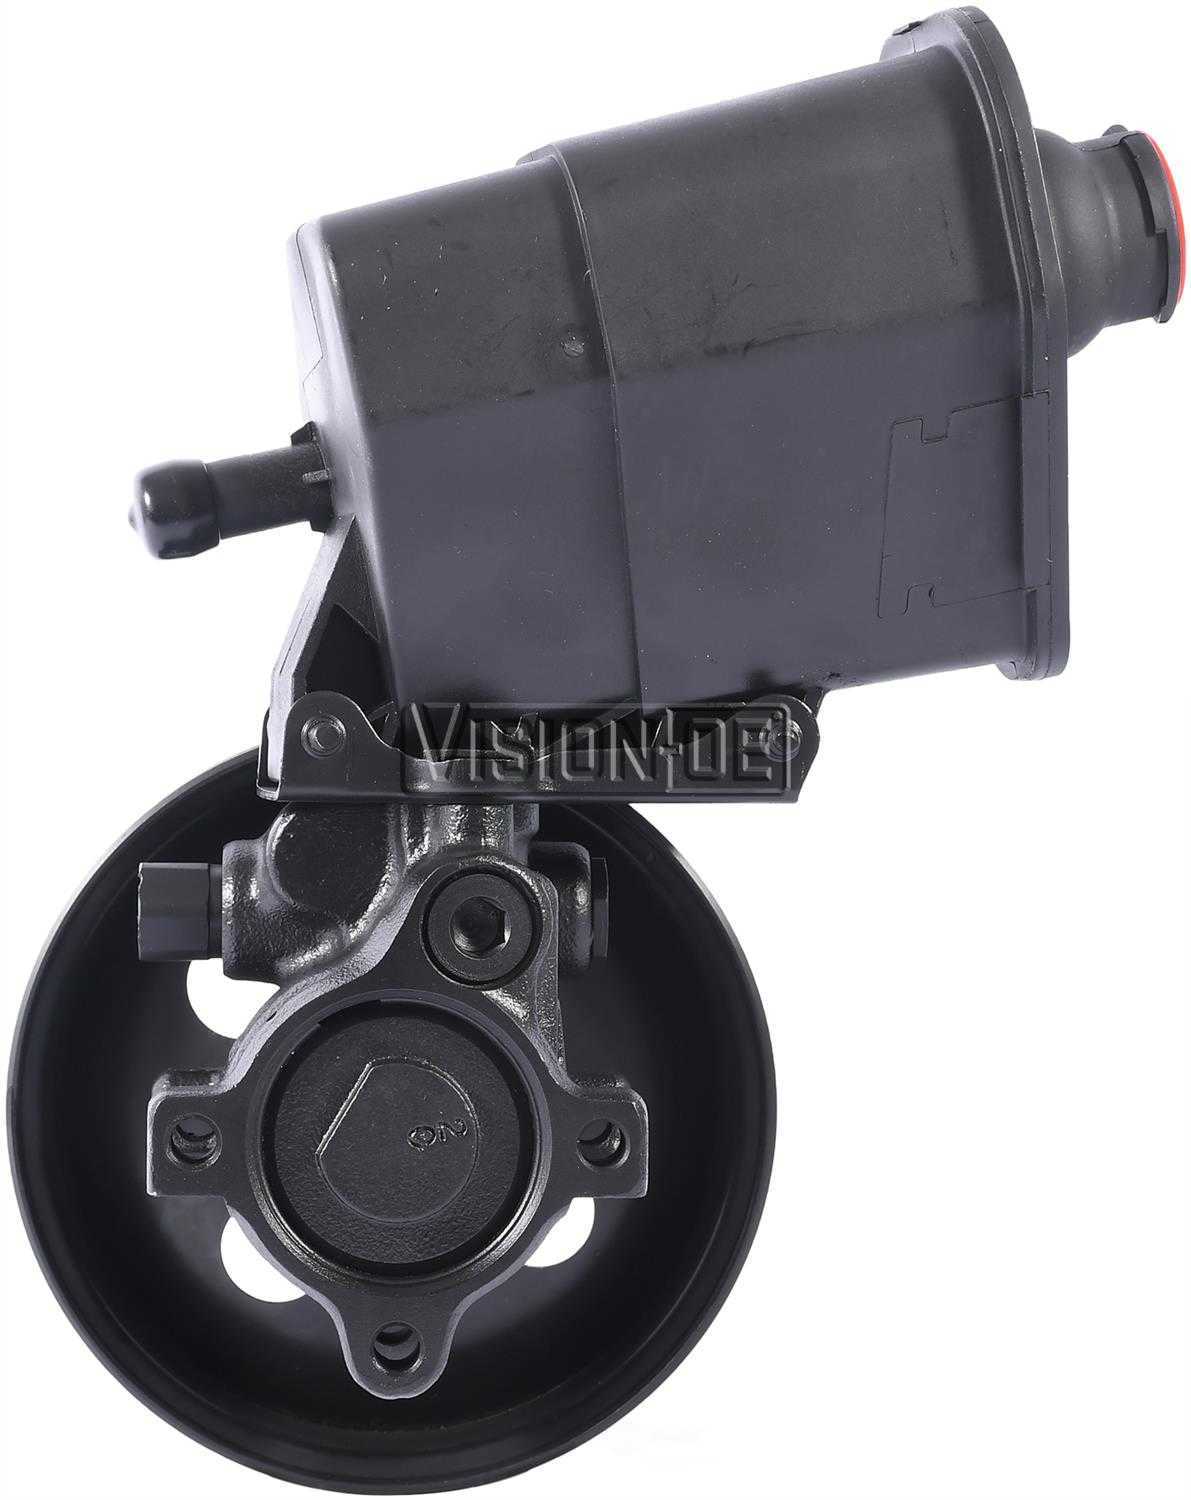 VISION-OE - Reman Power Steering Pump - VOE 720-01125A2